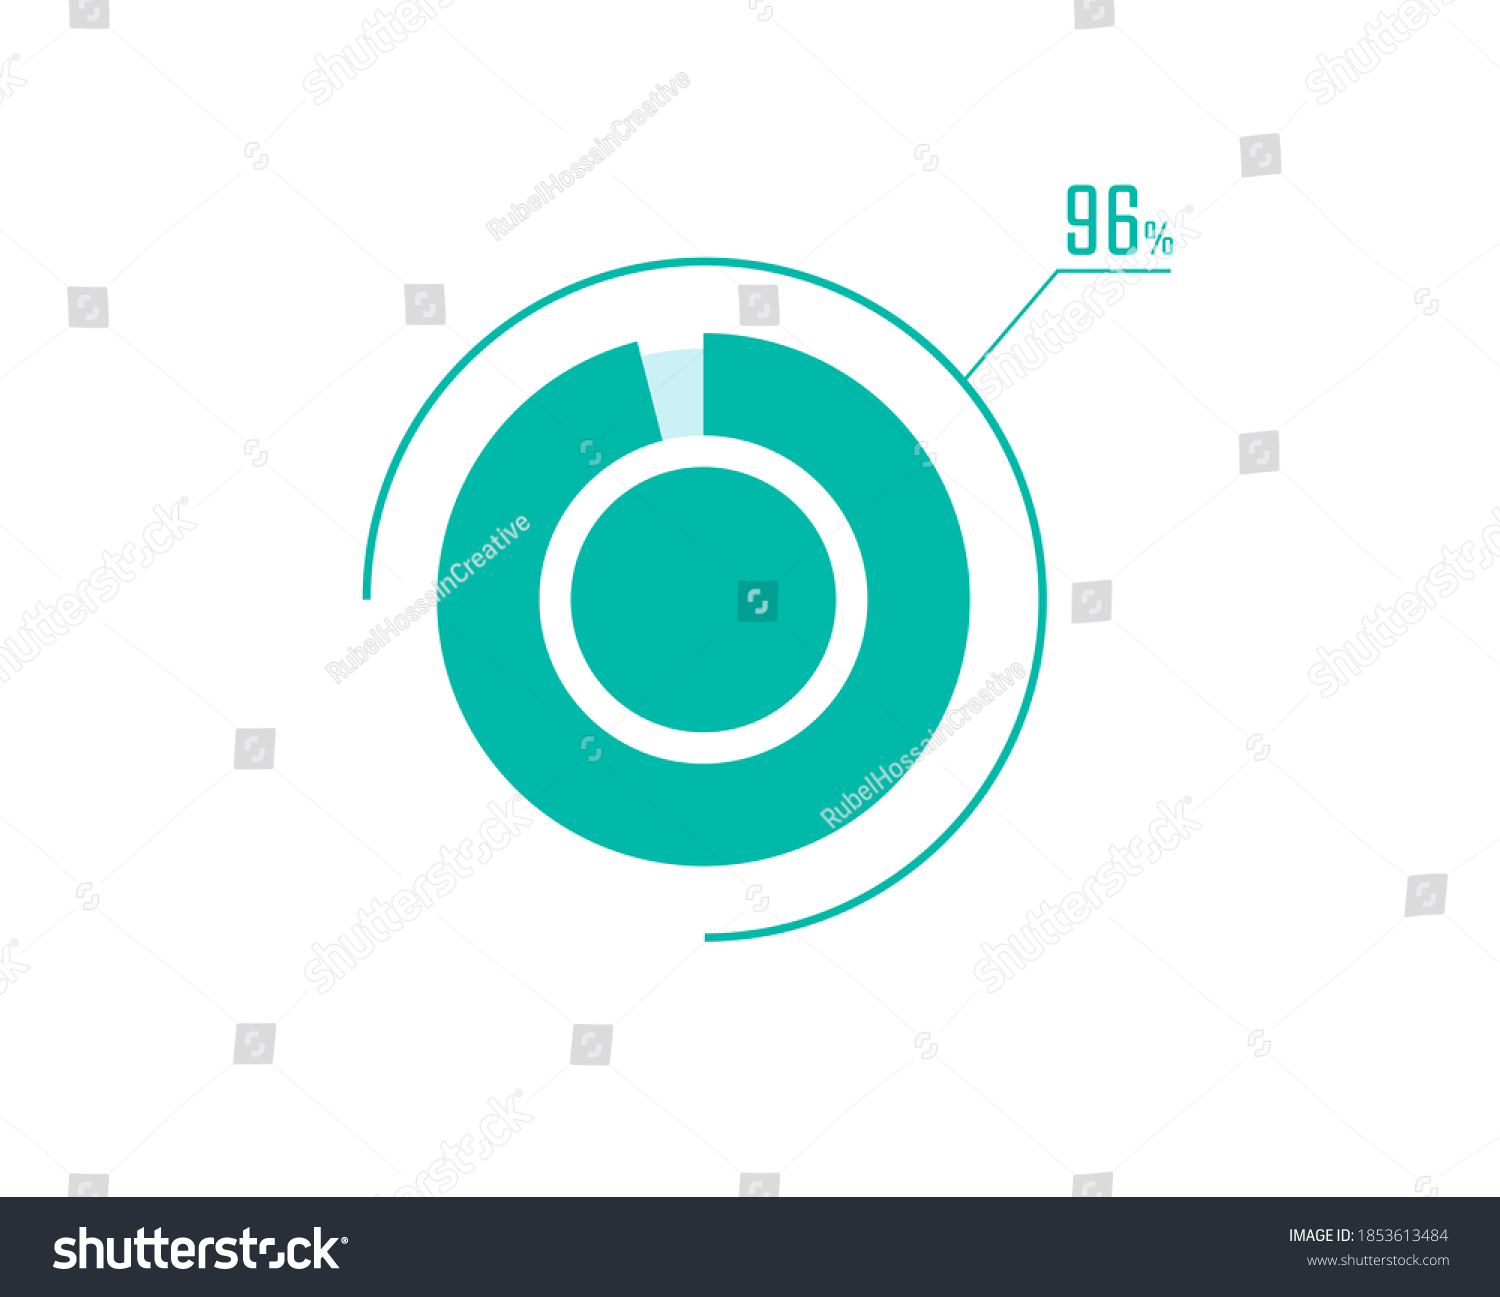 SVG of Circle Pie Chart showing 96 Percentage diagram infographic, UI, Web design. 96% Progress bar templates. Vector illustration svg